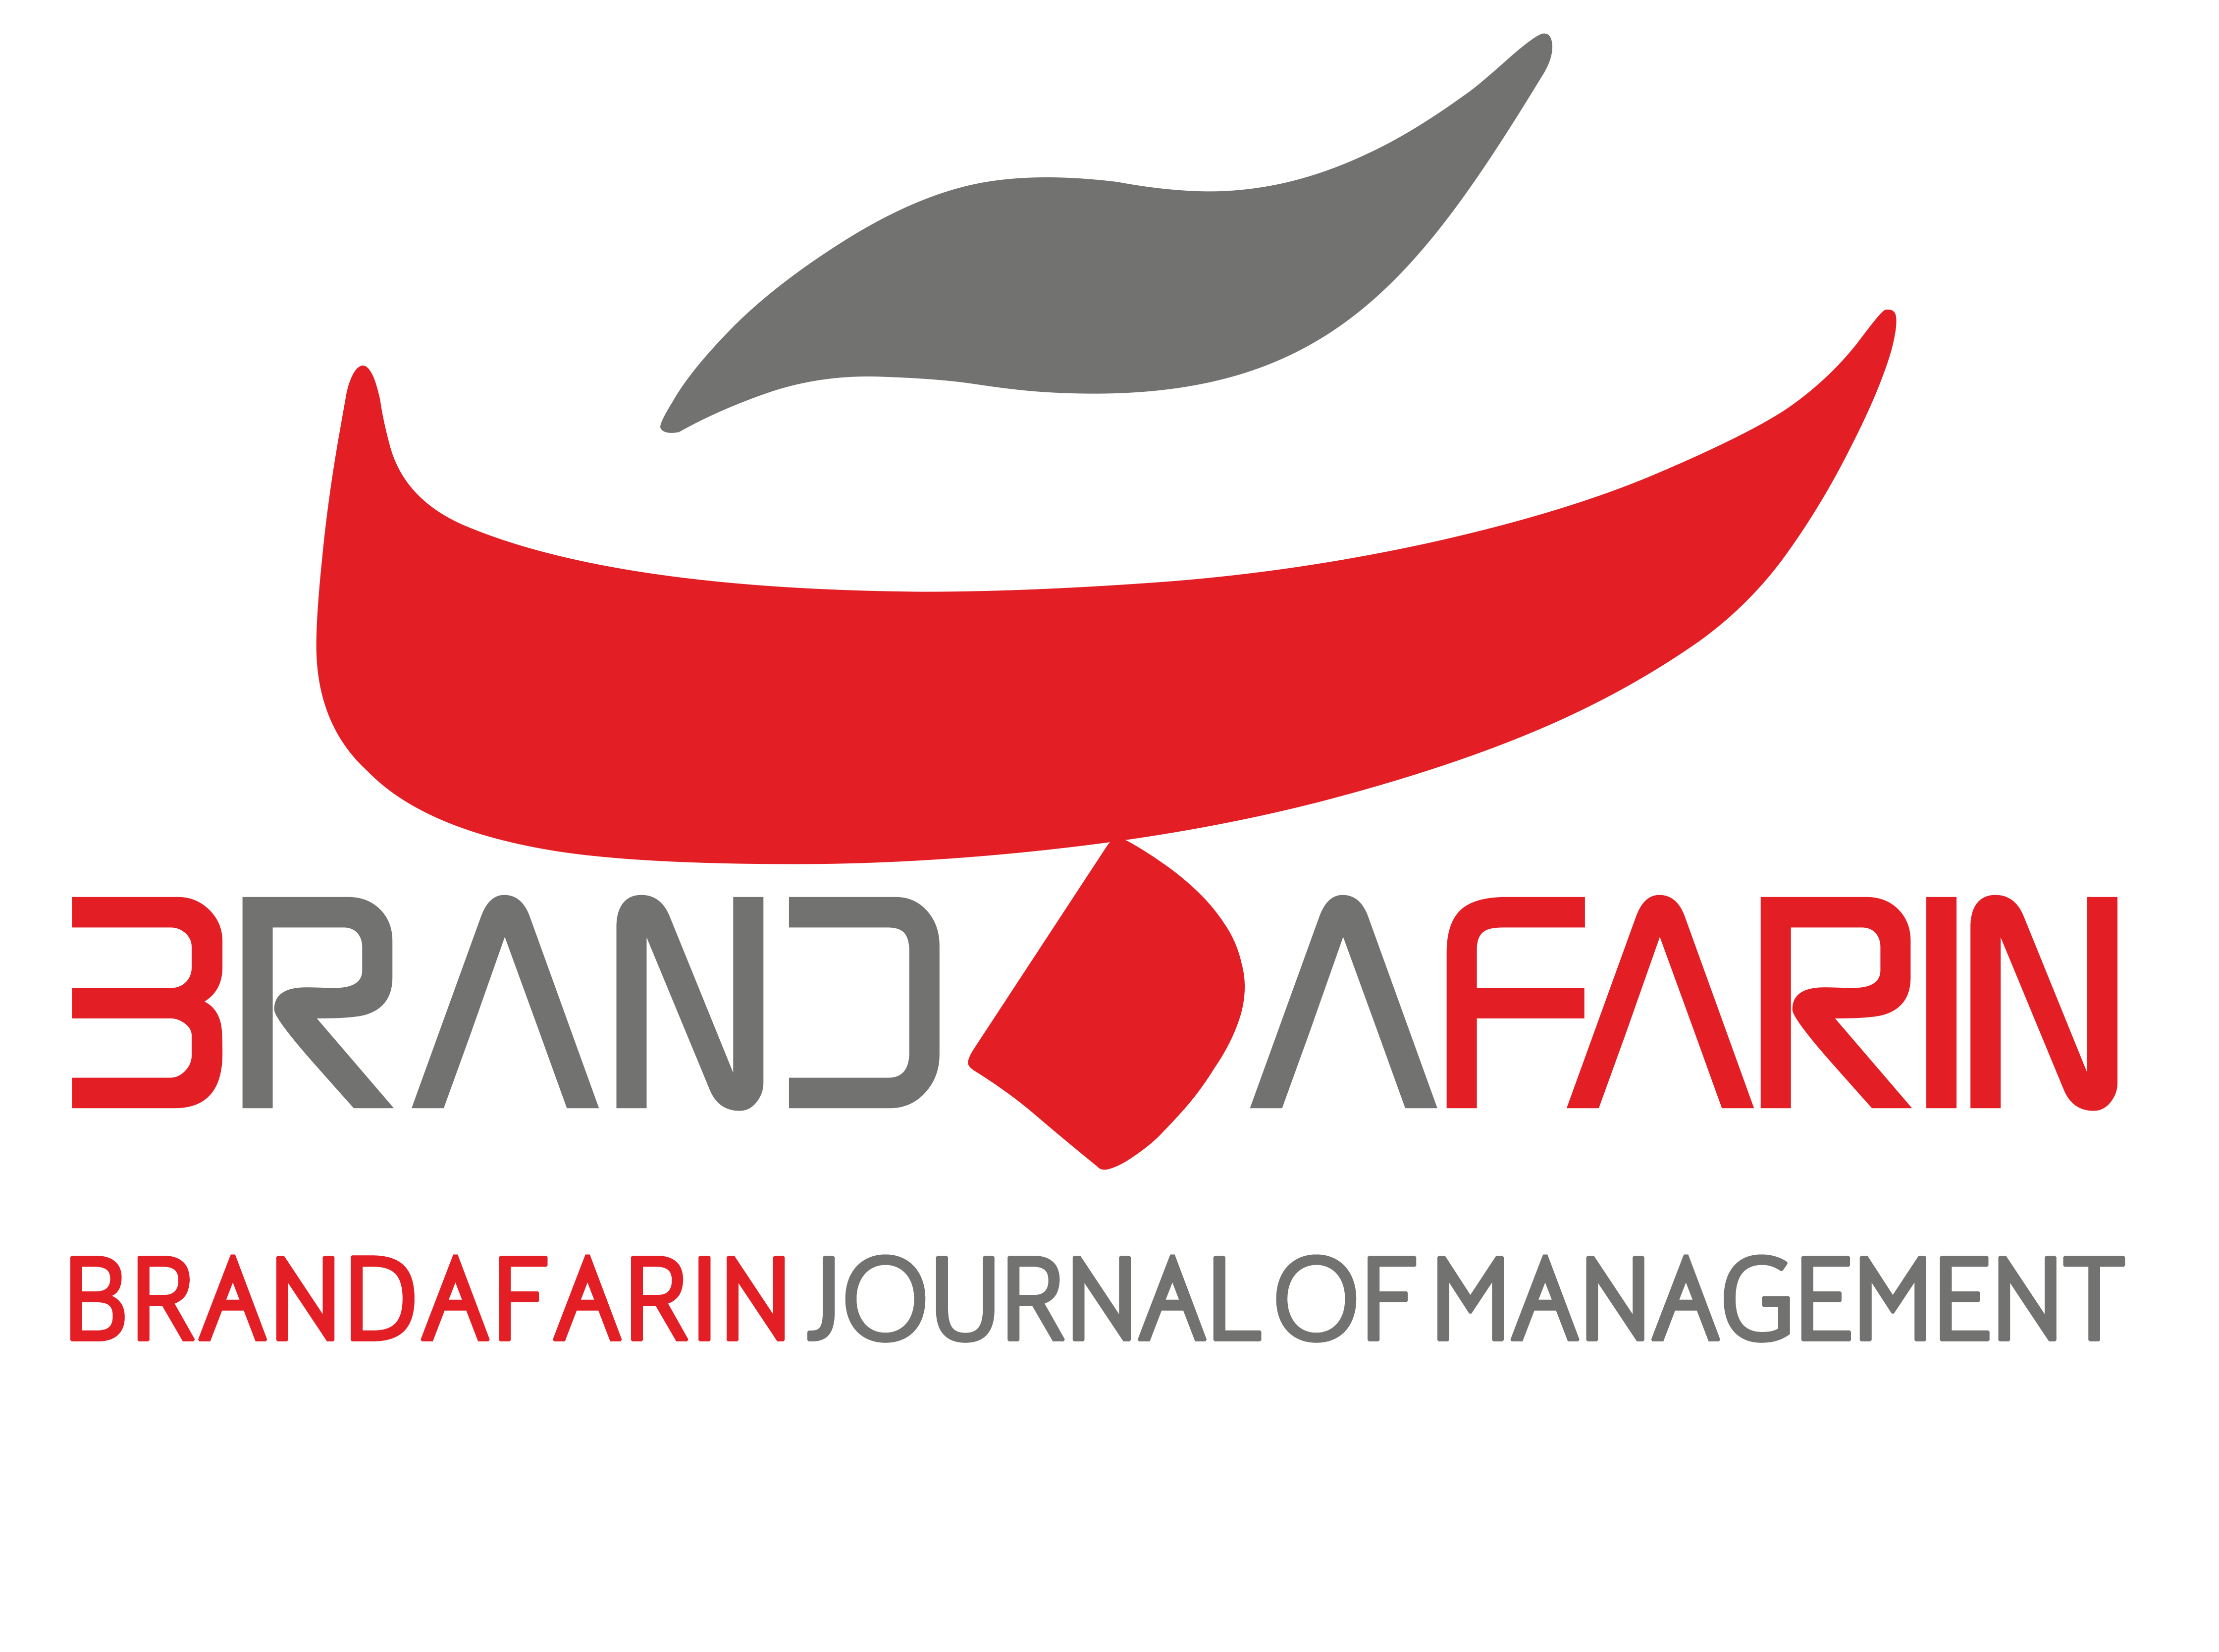 BRANDAFARIN Journal of Management